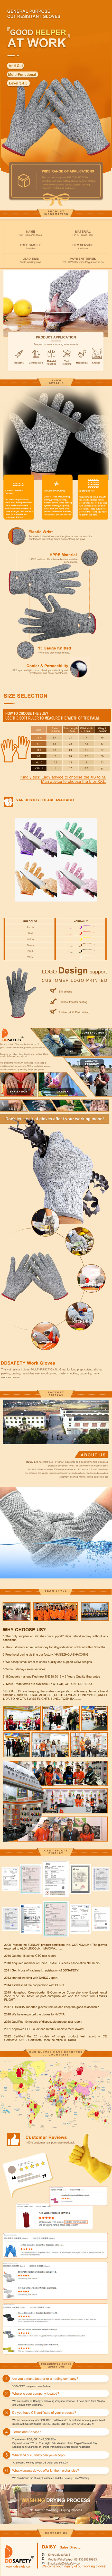 Cut Resistant Gloves Food Grade, Safety Kitchen Cuts Gloves - DCR103 Cut Resistant Gloves Food Grade, Safety Kitchen Cuts Gloves - DCR103 gloves,cut resistant gloves,cut gloves,kitchen gloves,safety gloves